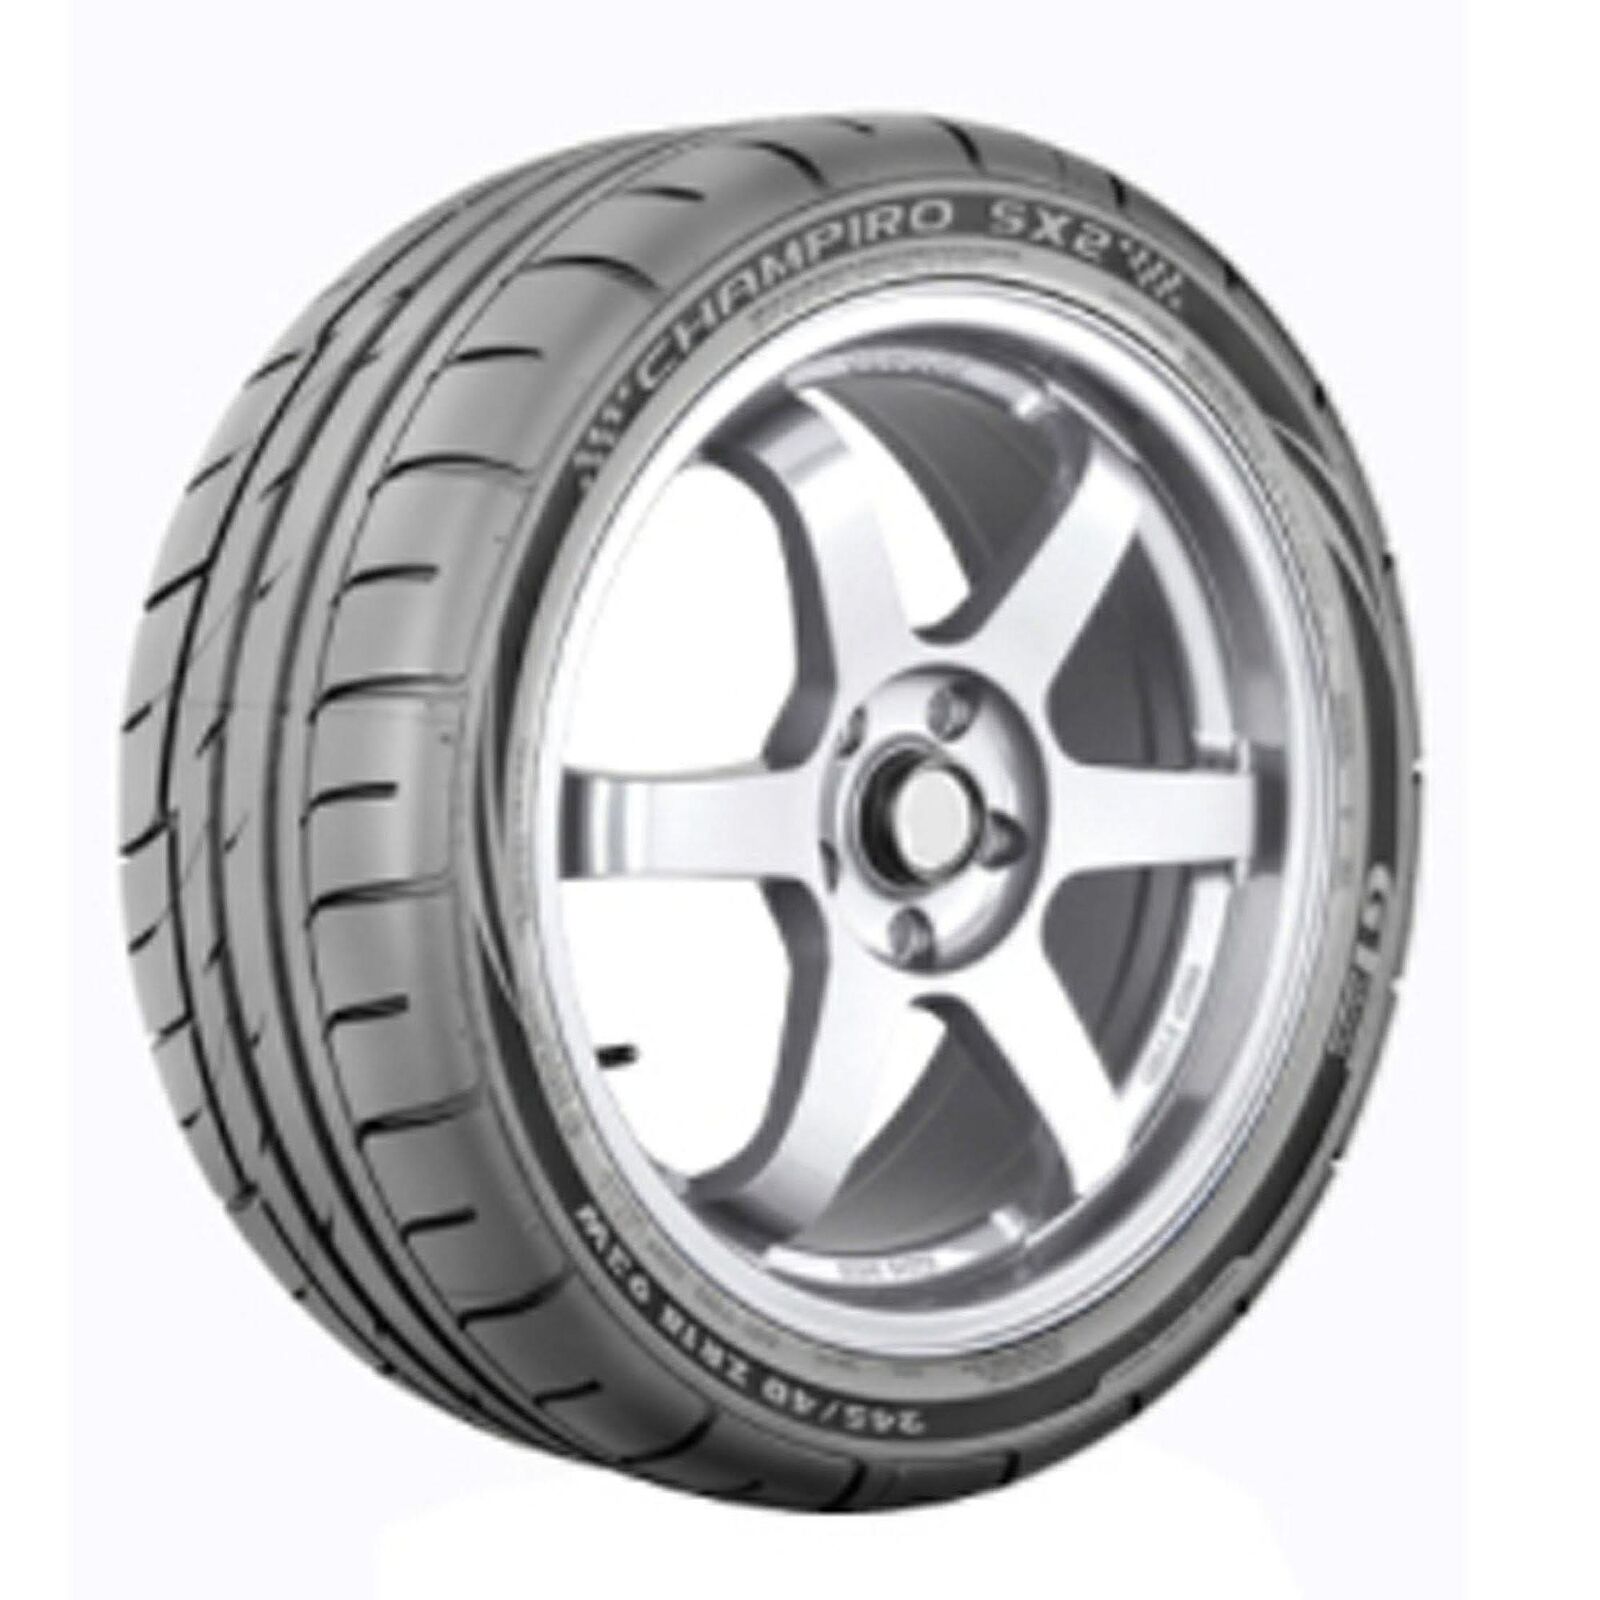 4 New Gt Radial Champiro Sx2  - 195/50zr15 Tires 1955015 195 50 15